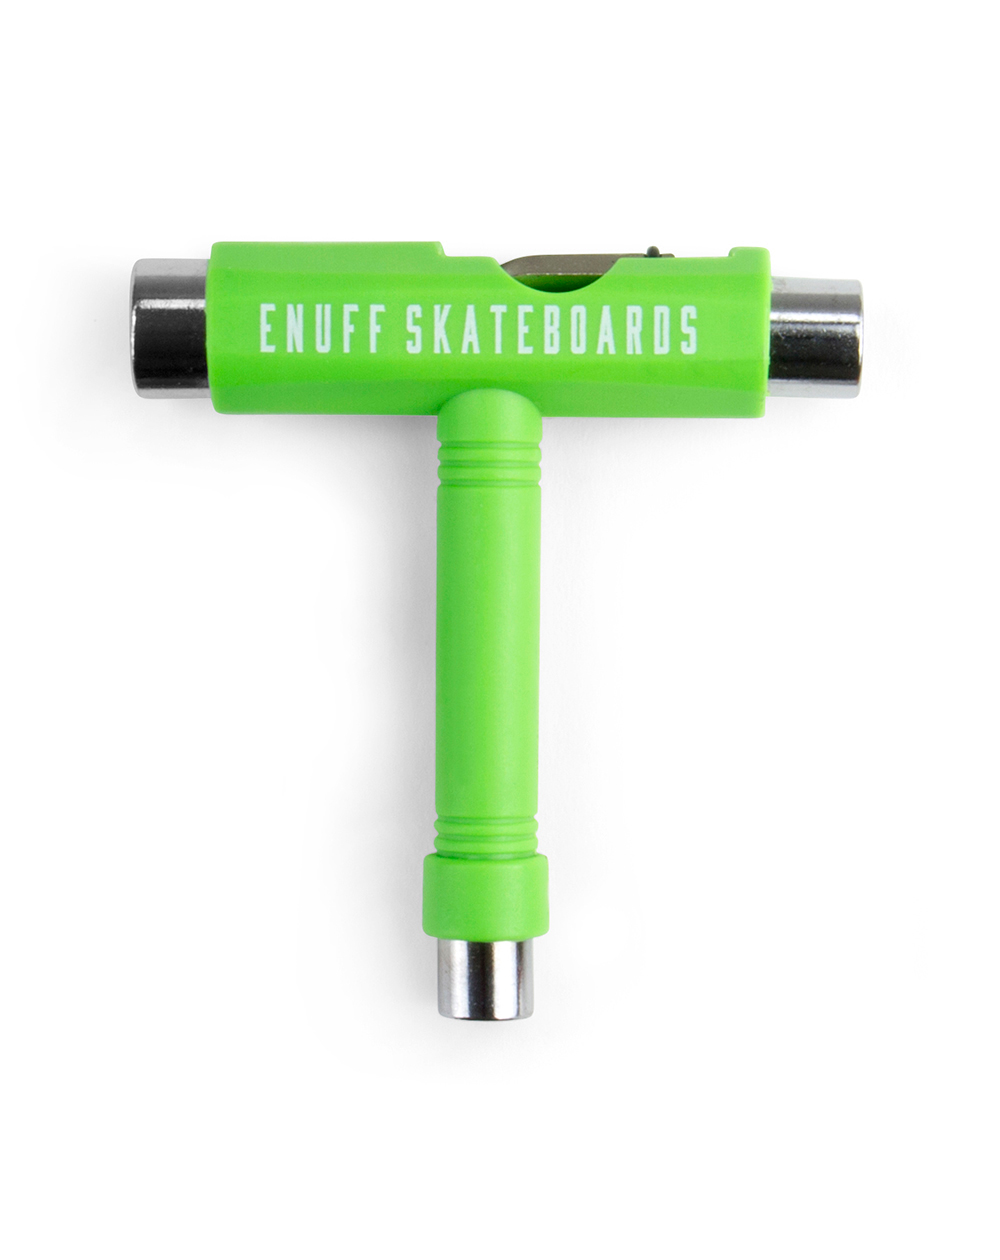 Enuff Herramienta para Skateboard Essential Tool Green